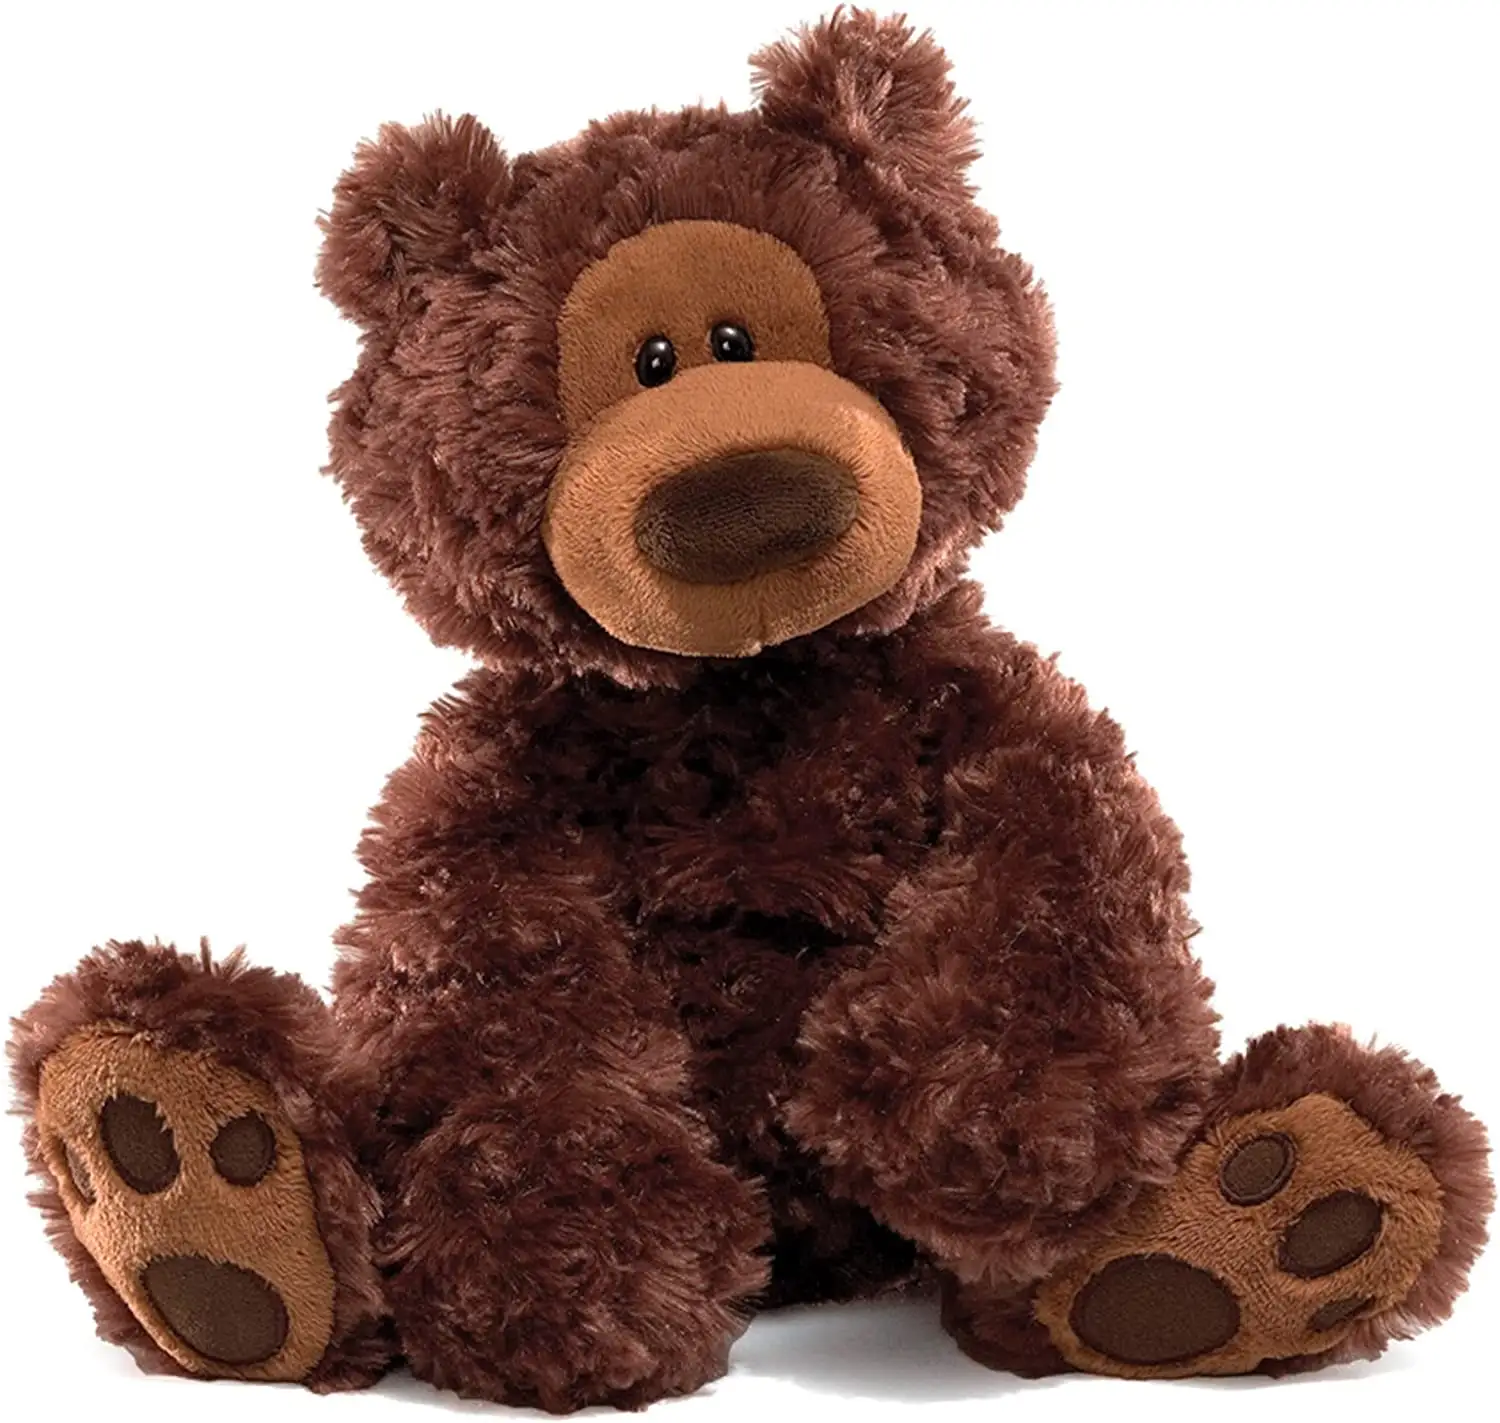 Wholesale Toy Bear Plush Bearplush Soft Toys Teddy Bear Stuffed Animal Soft Baby Bear Teddy Plush Gifts For Kids